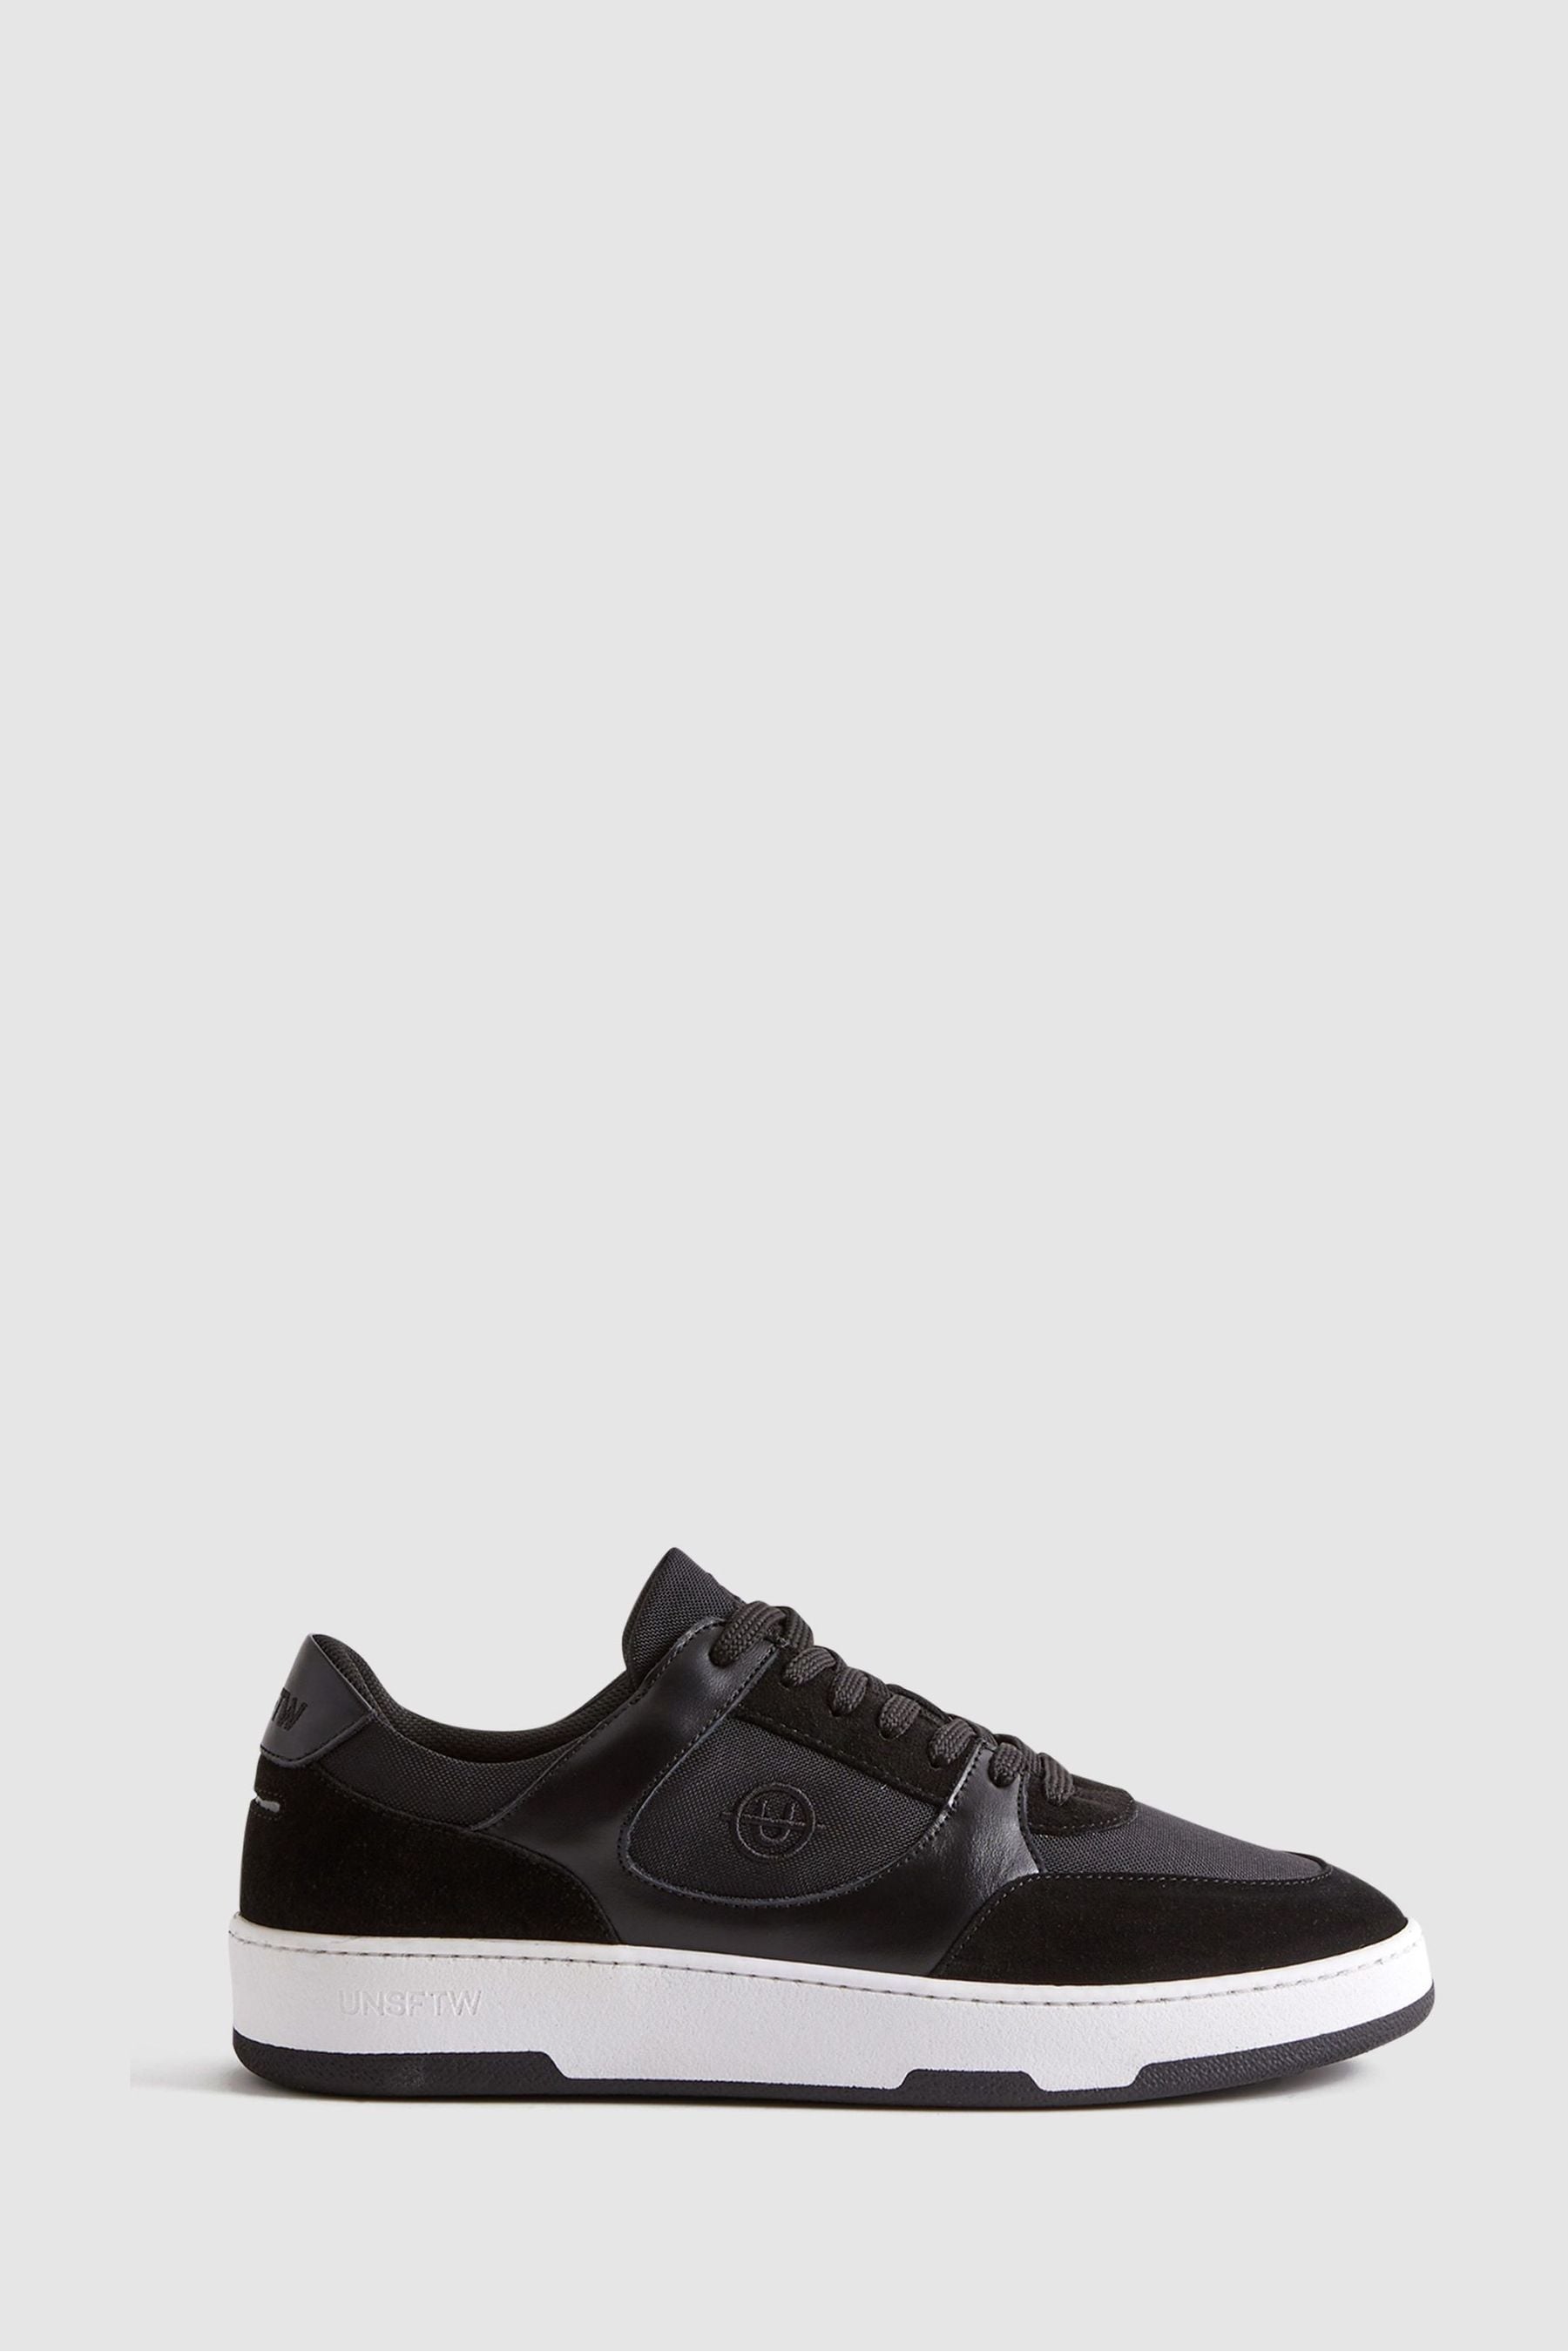 Unseen Footwear Noirmont Trainers In White/black